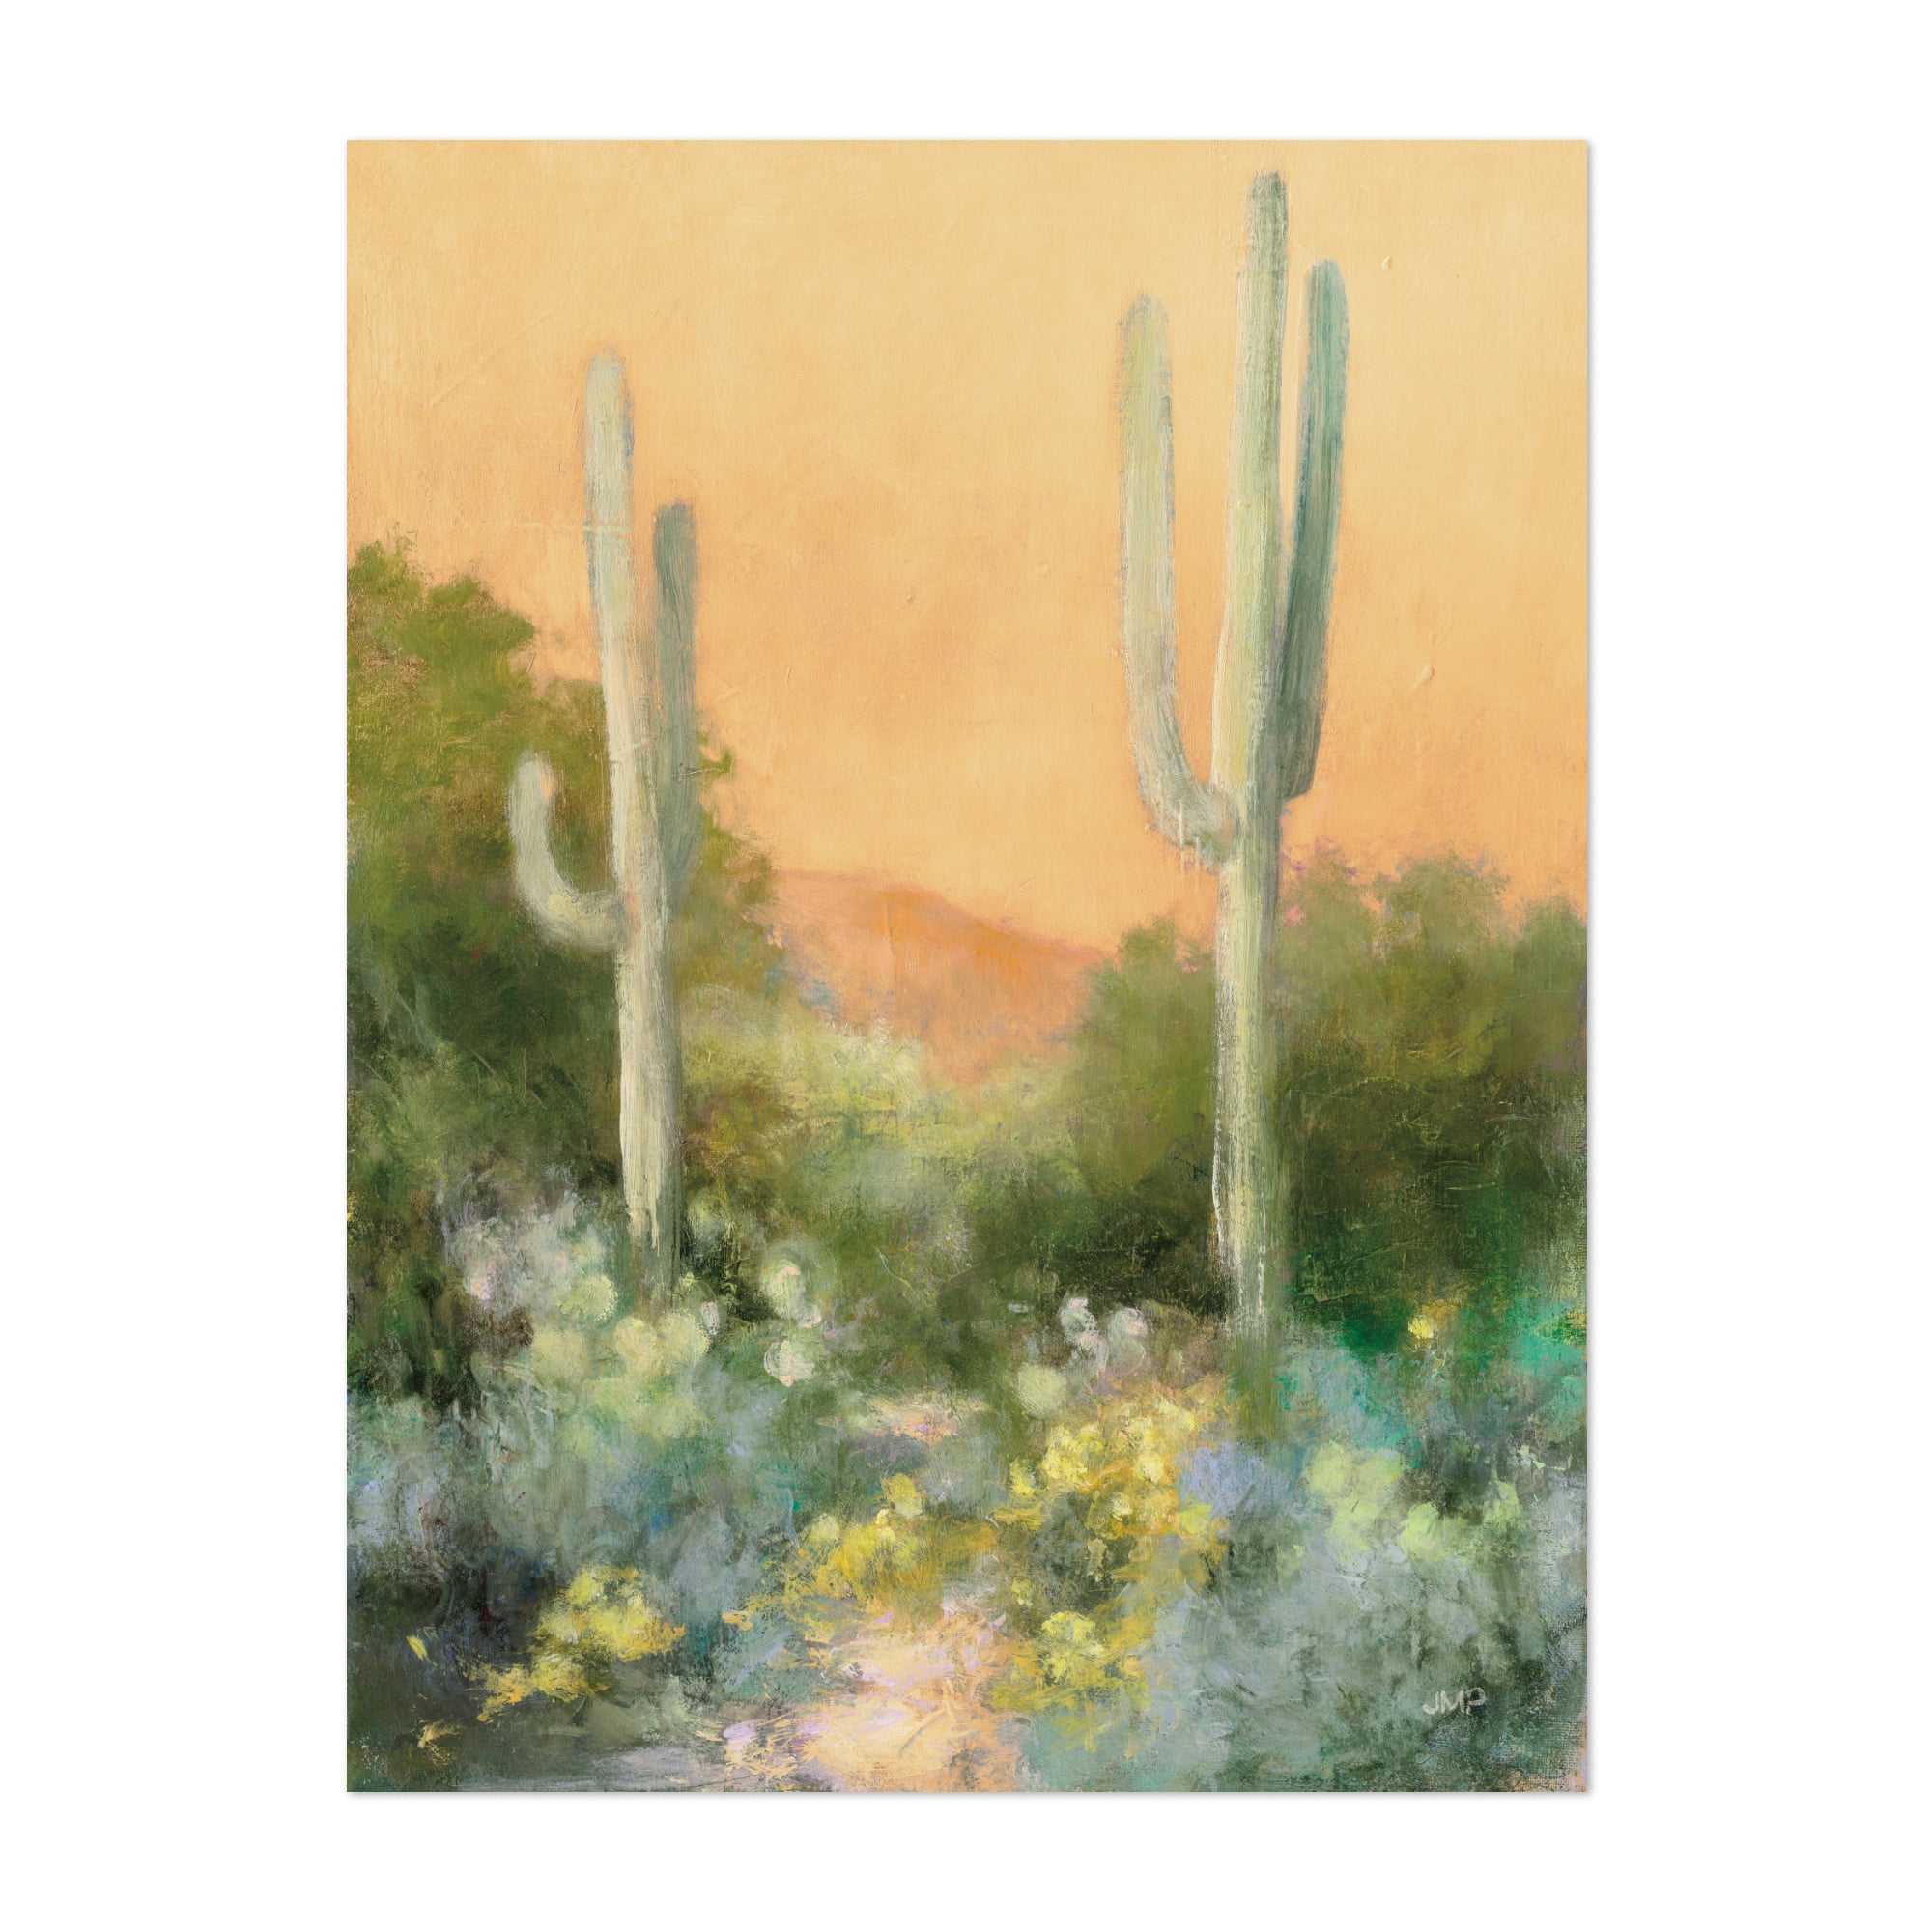 Saguaro Cactus Art Deco Nature Painting Original Cactus Painting 16 x 20 Inch Acrylic Painting Desert Painting Colorful Cactus Painting